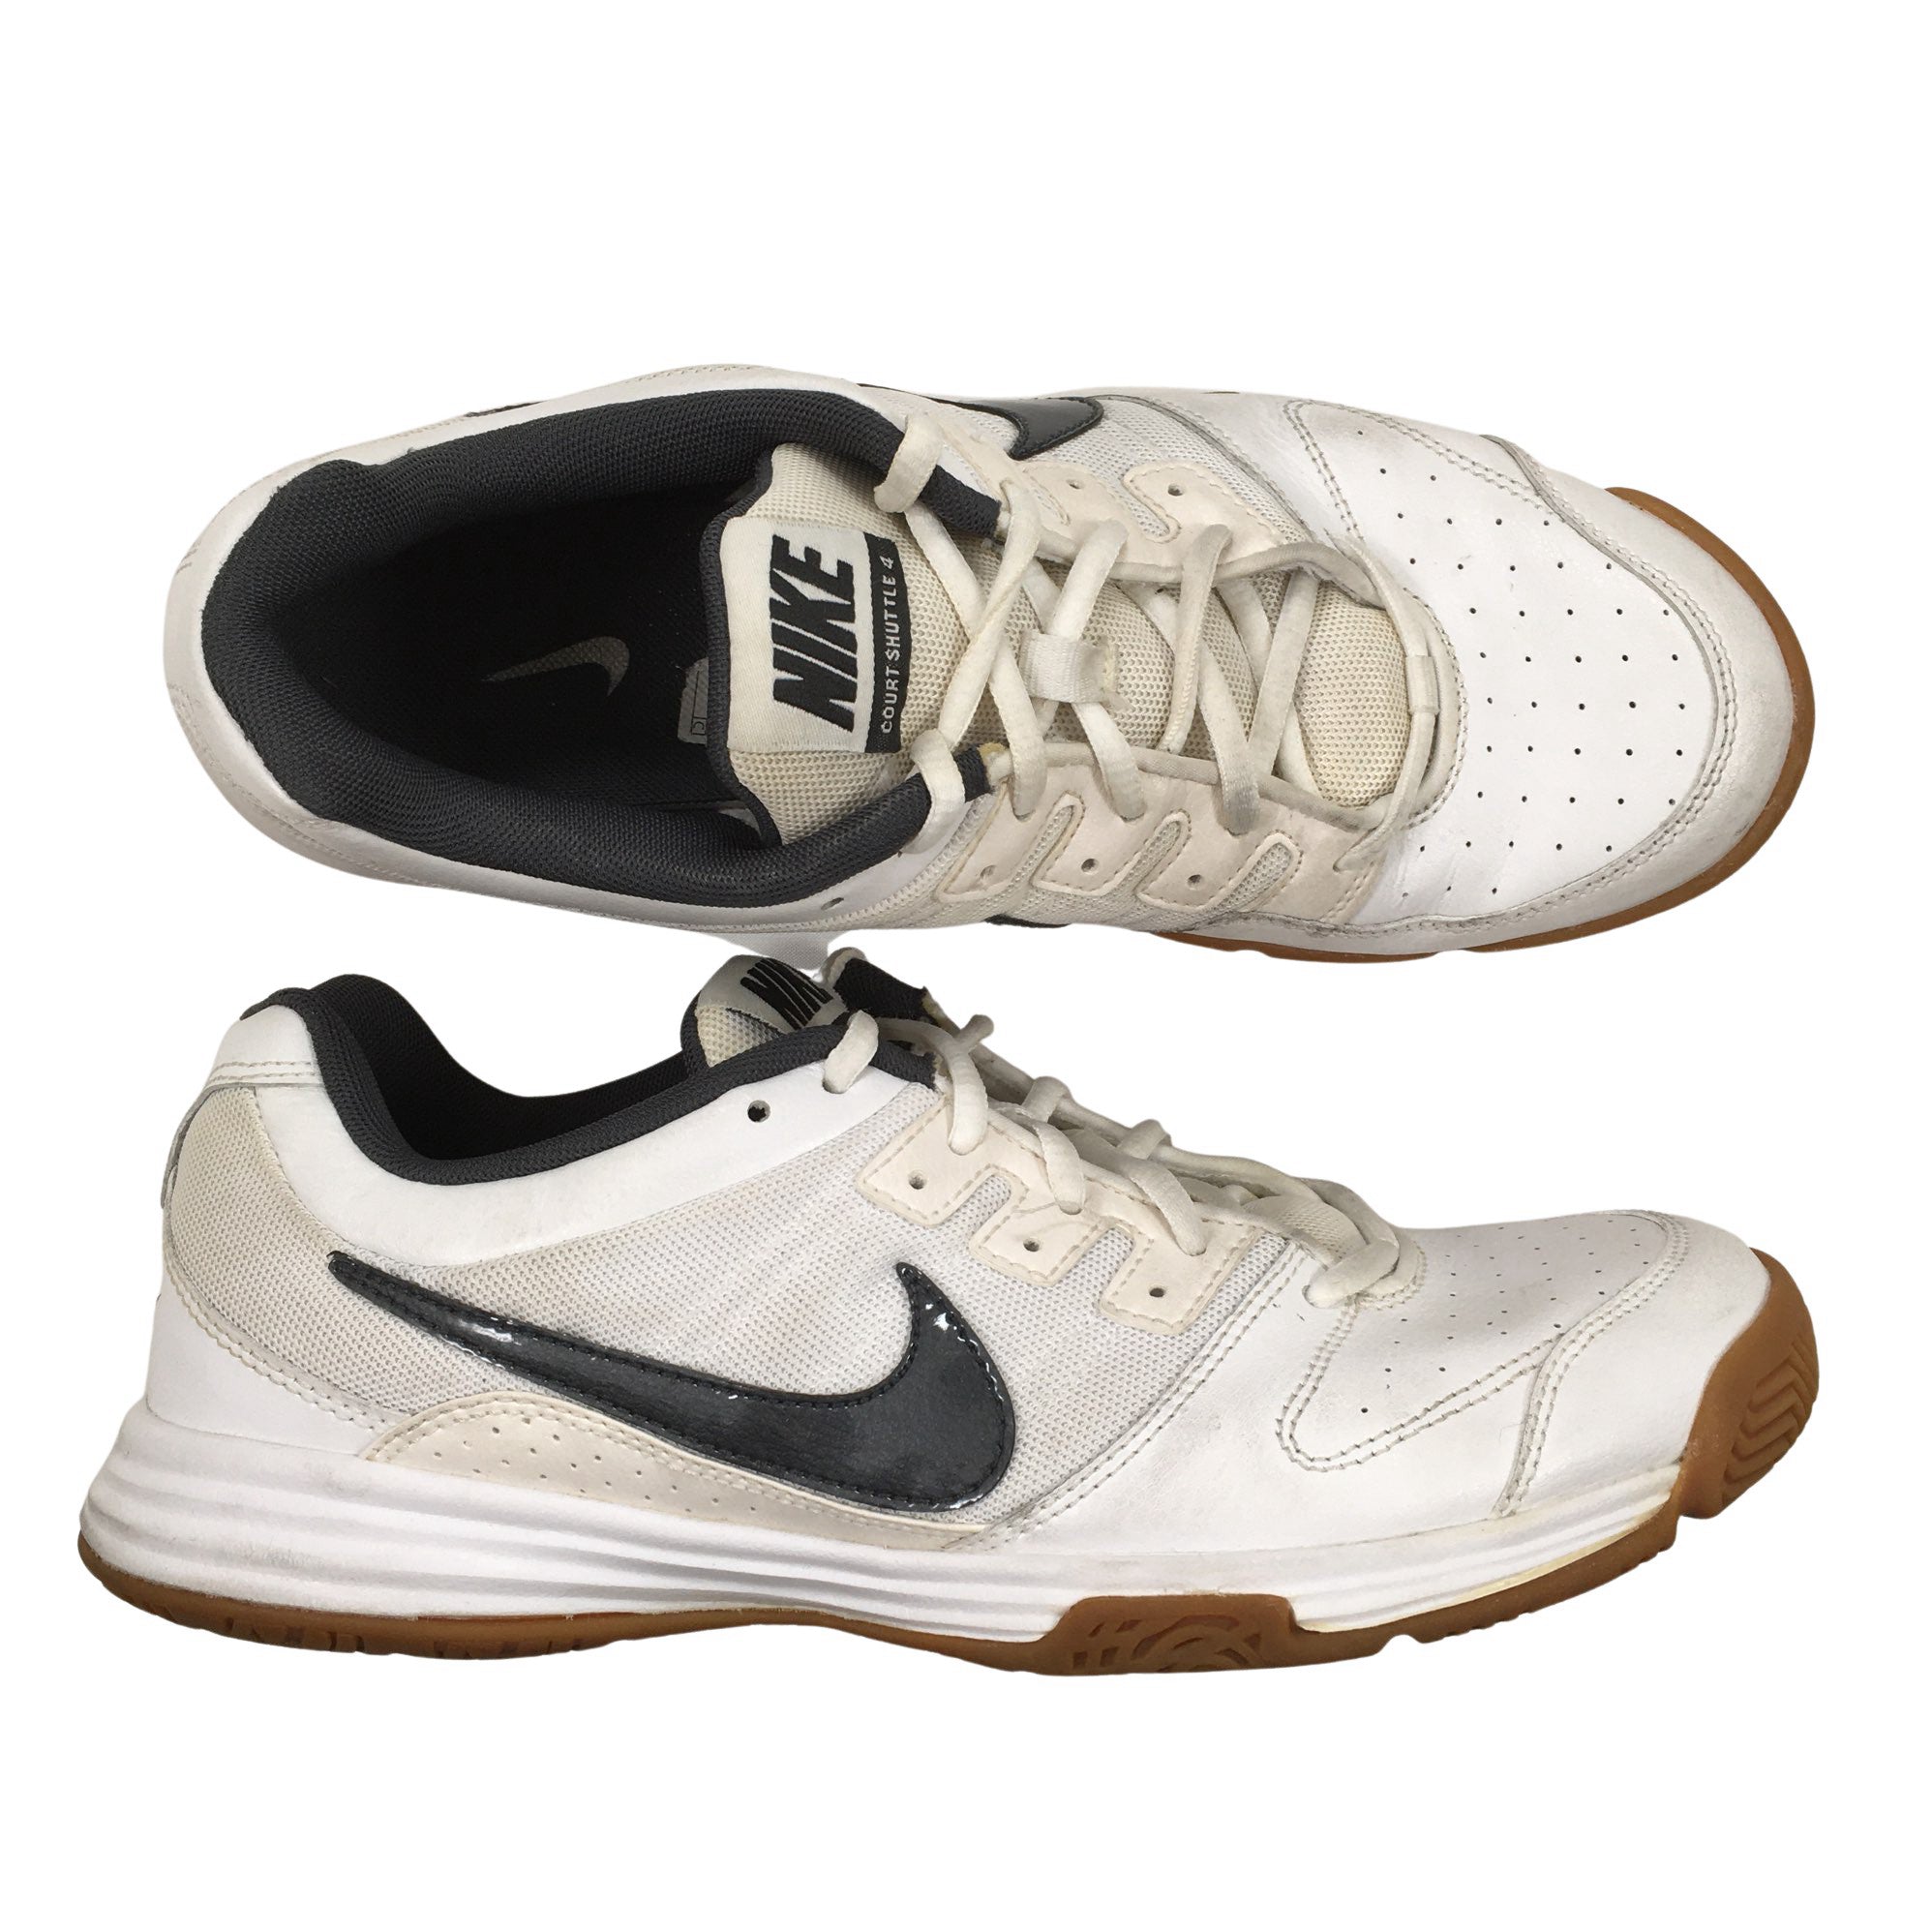 Men's Nike sports shoes, size Emmy